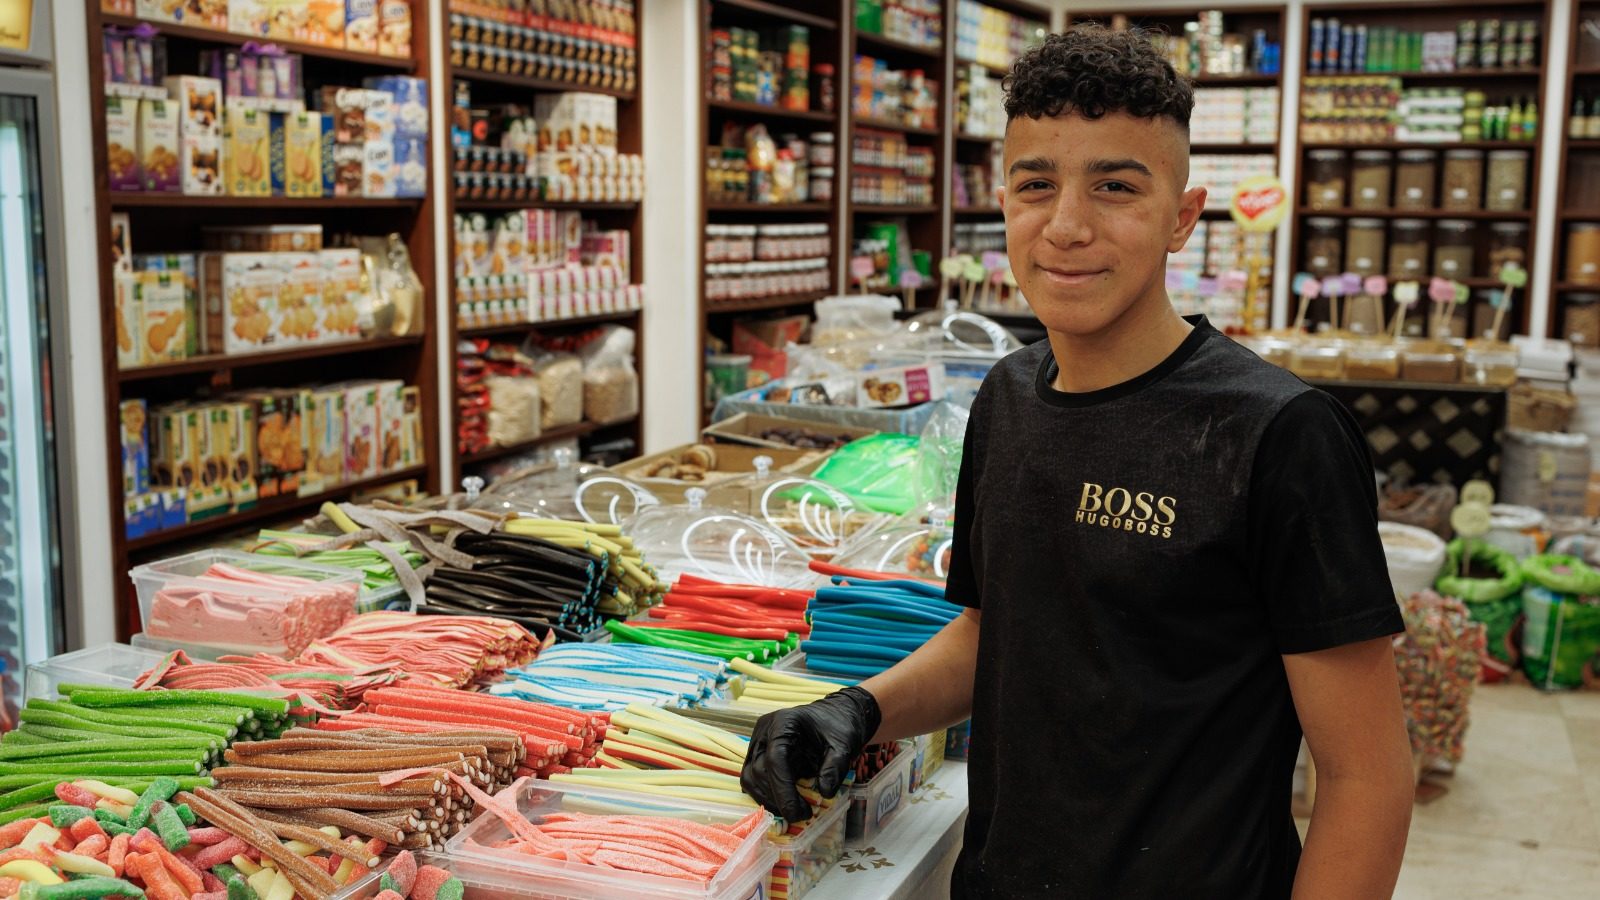 Jerusalem’s Merchants Are Struggling Despite Ramadan, Eid Business